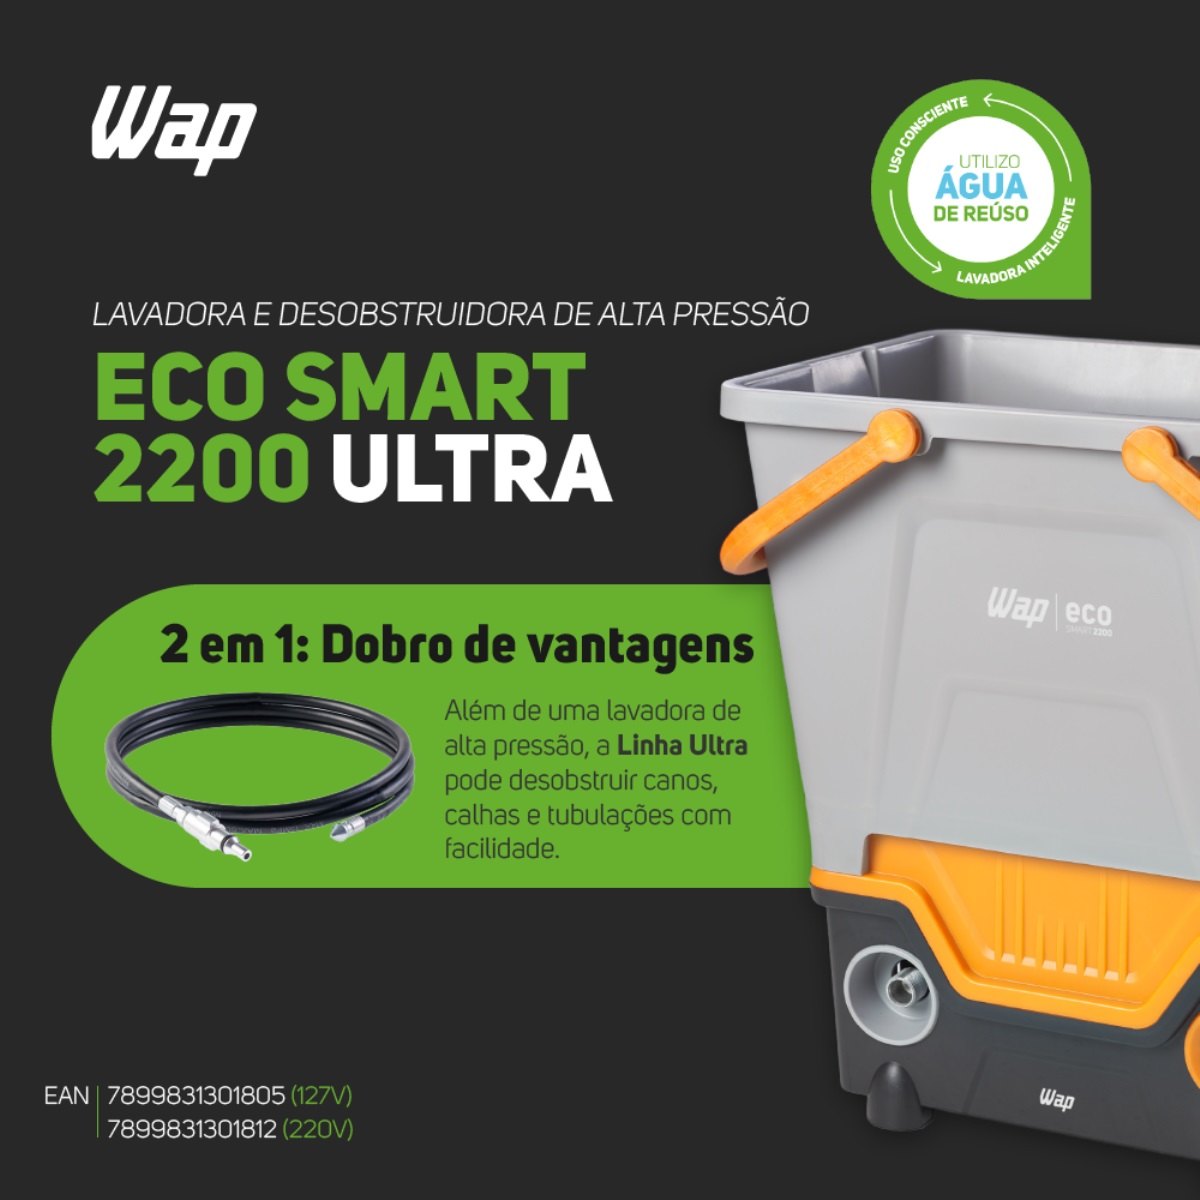 6090052_Lavadora-de-Alta-Pressao-WAP-Eco-Smart-2200-Ultra-Uso-Profissional-Universal-1700Libras-1750W-5m-220V_4_Zoom